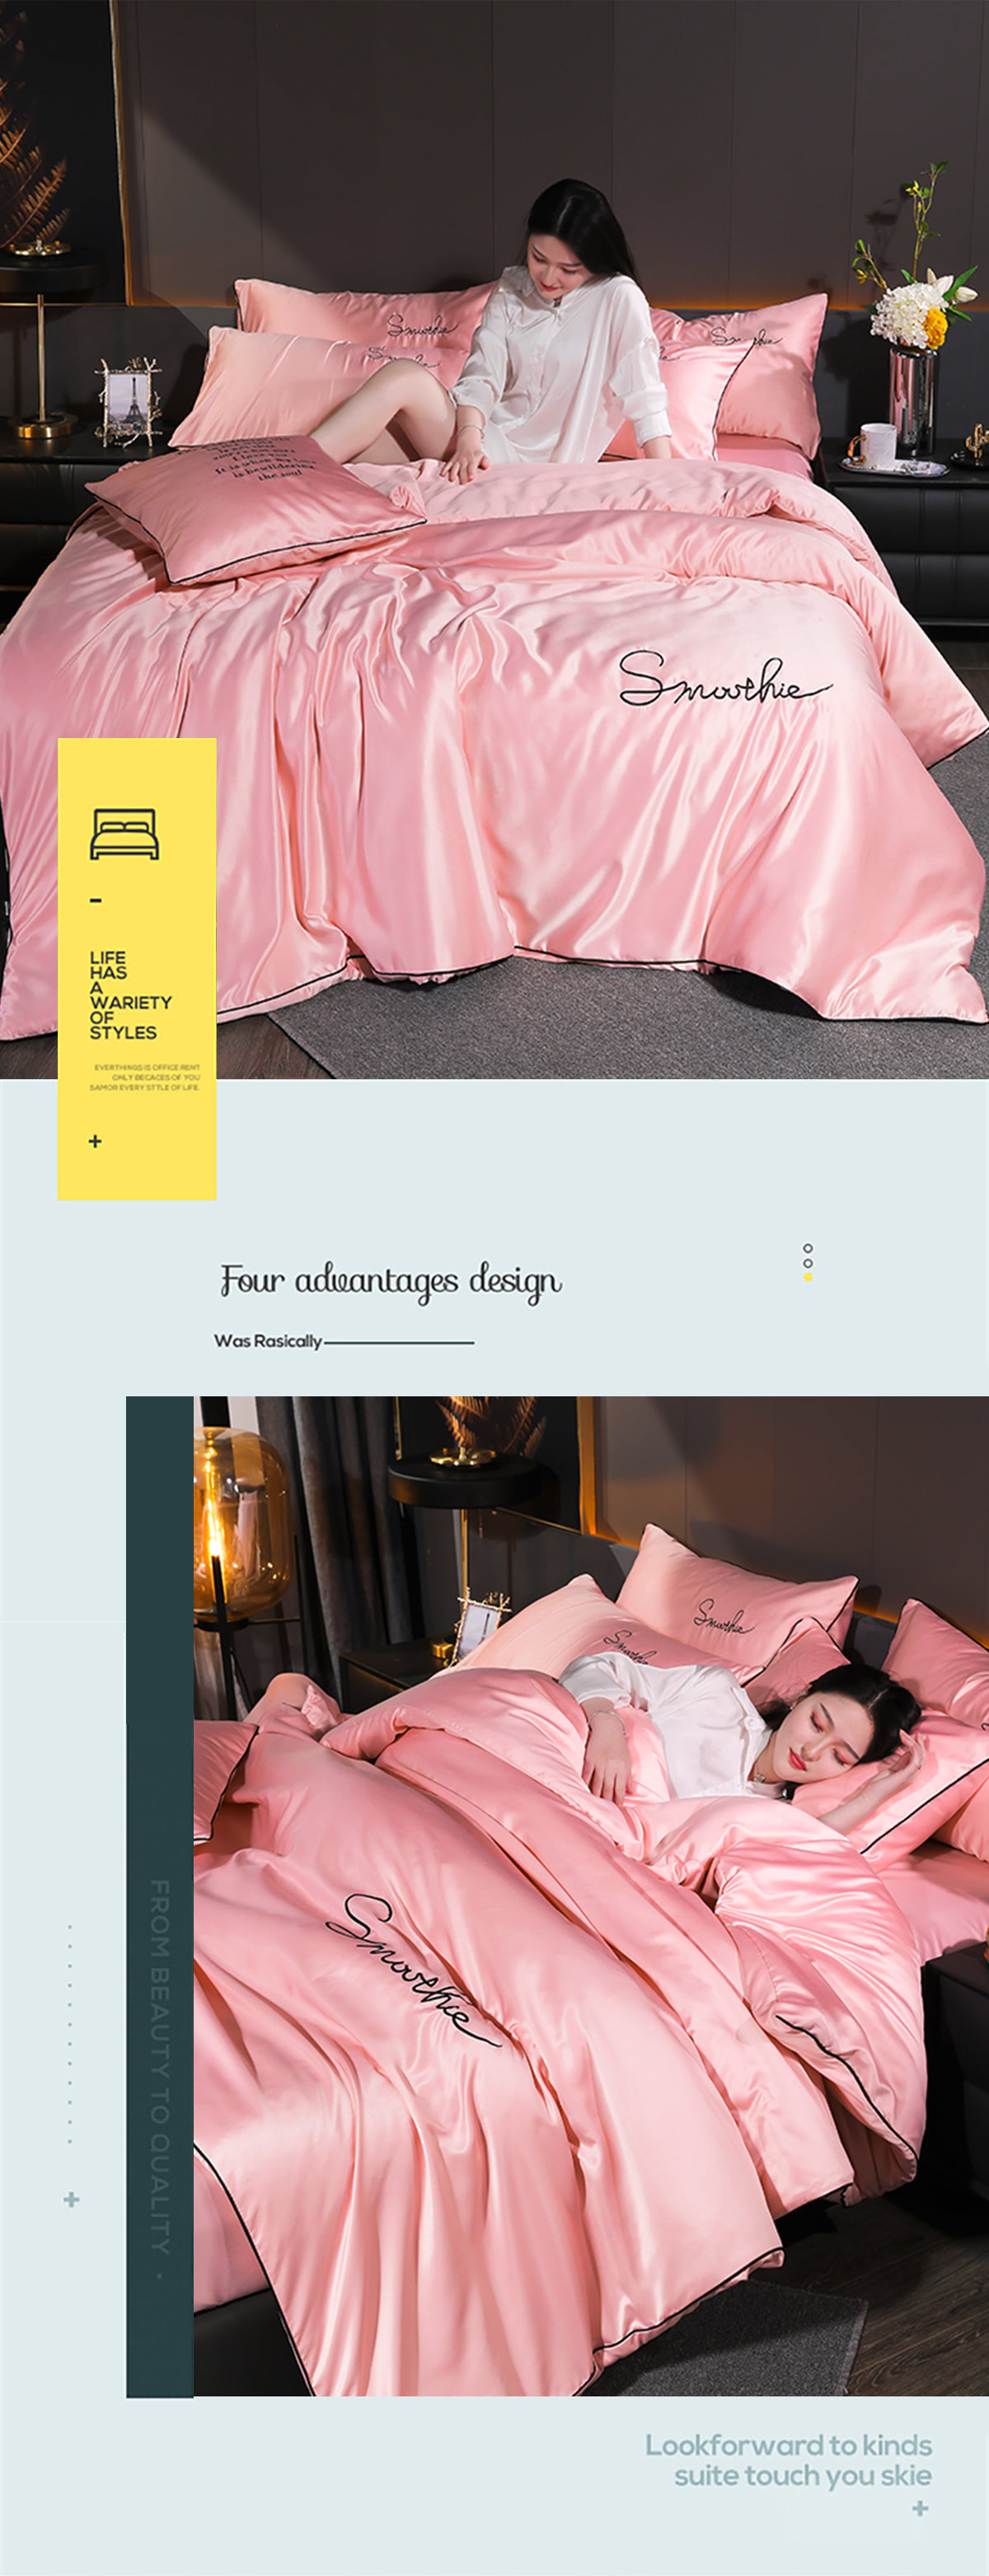 Super-Soft-Solid-Color-Silky-Satin-Flat-Sheet-Bedding-4-Pcs-Set25